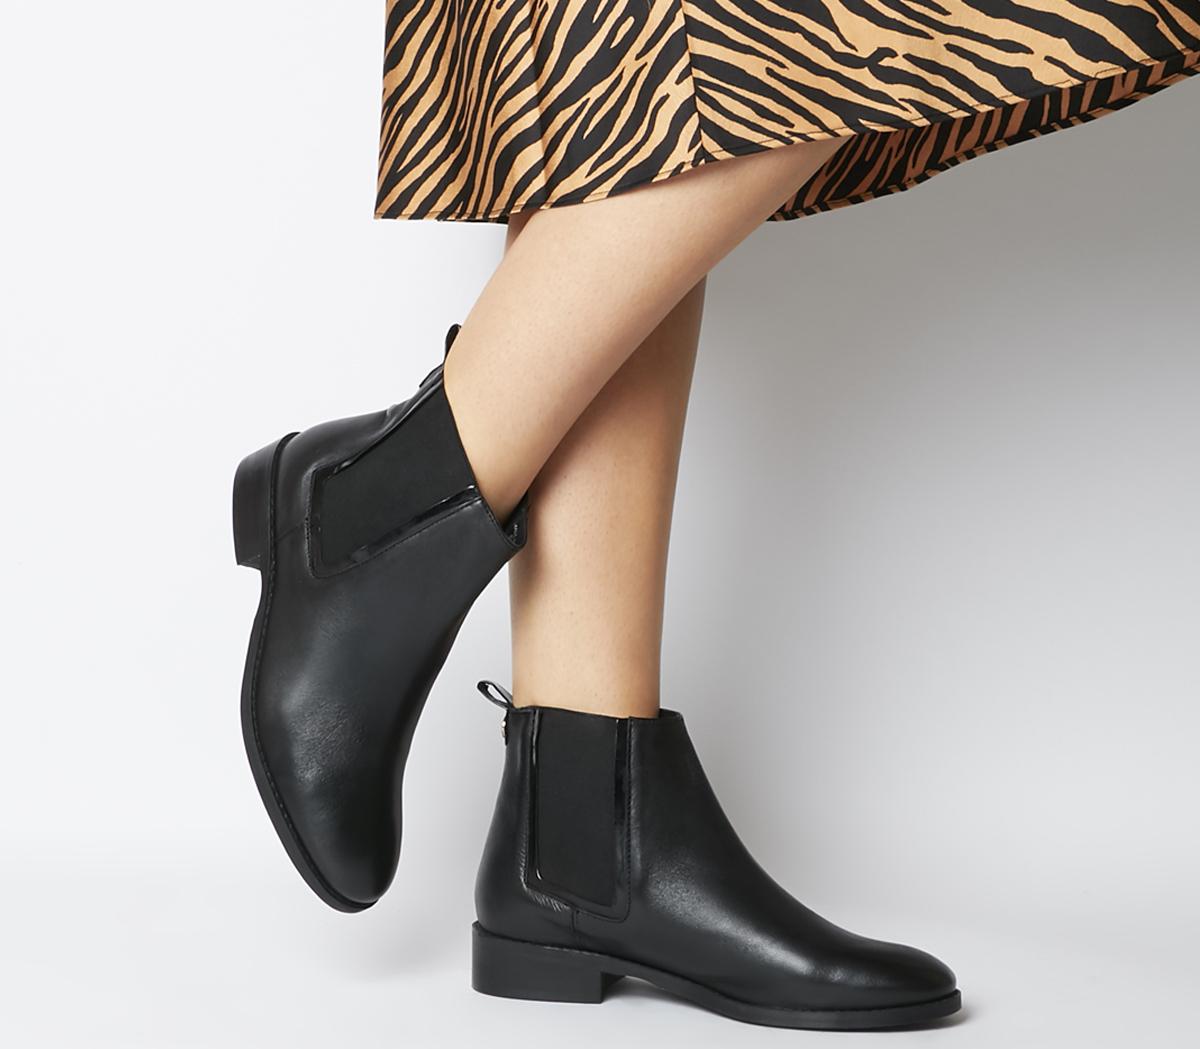 OFFICEAcorn Feature Chelsea Ankle BootsBlack Leather Patent Feature Chelsea